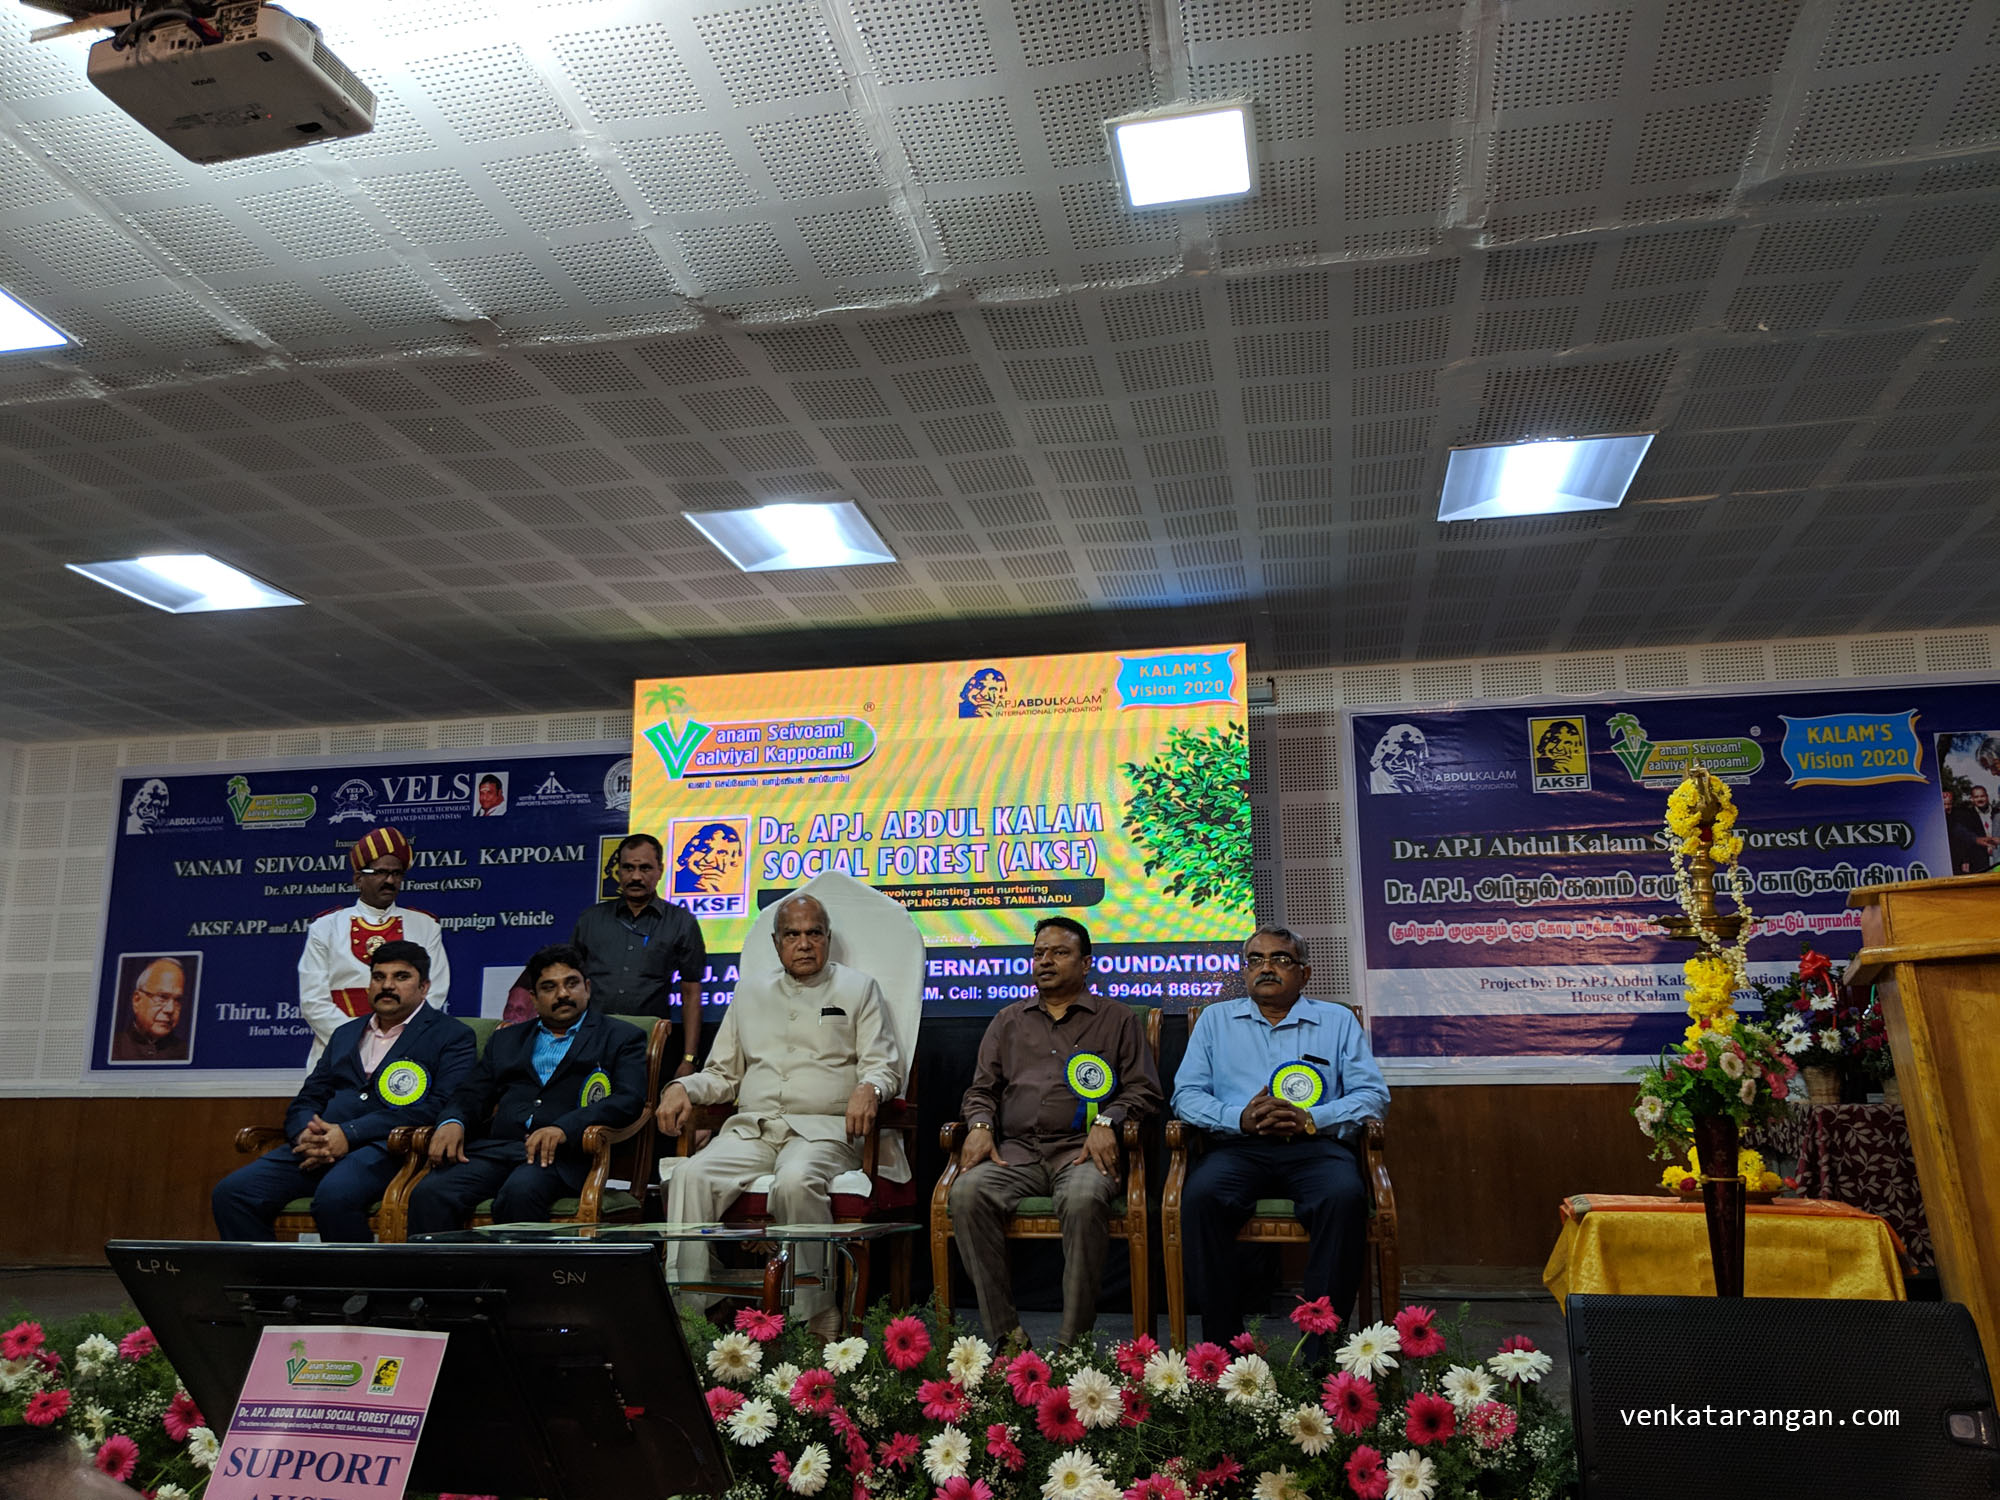 Hon’ble Tamil Nadu Governor Sri Banwarilal Purohit at the inauguration of Dr APJ Abdul Kalam Social Forest Program